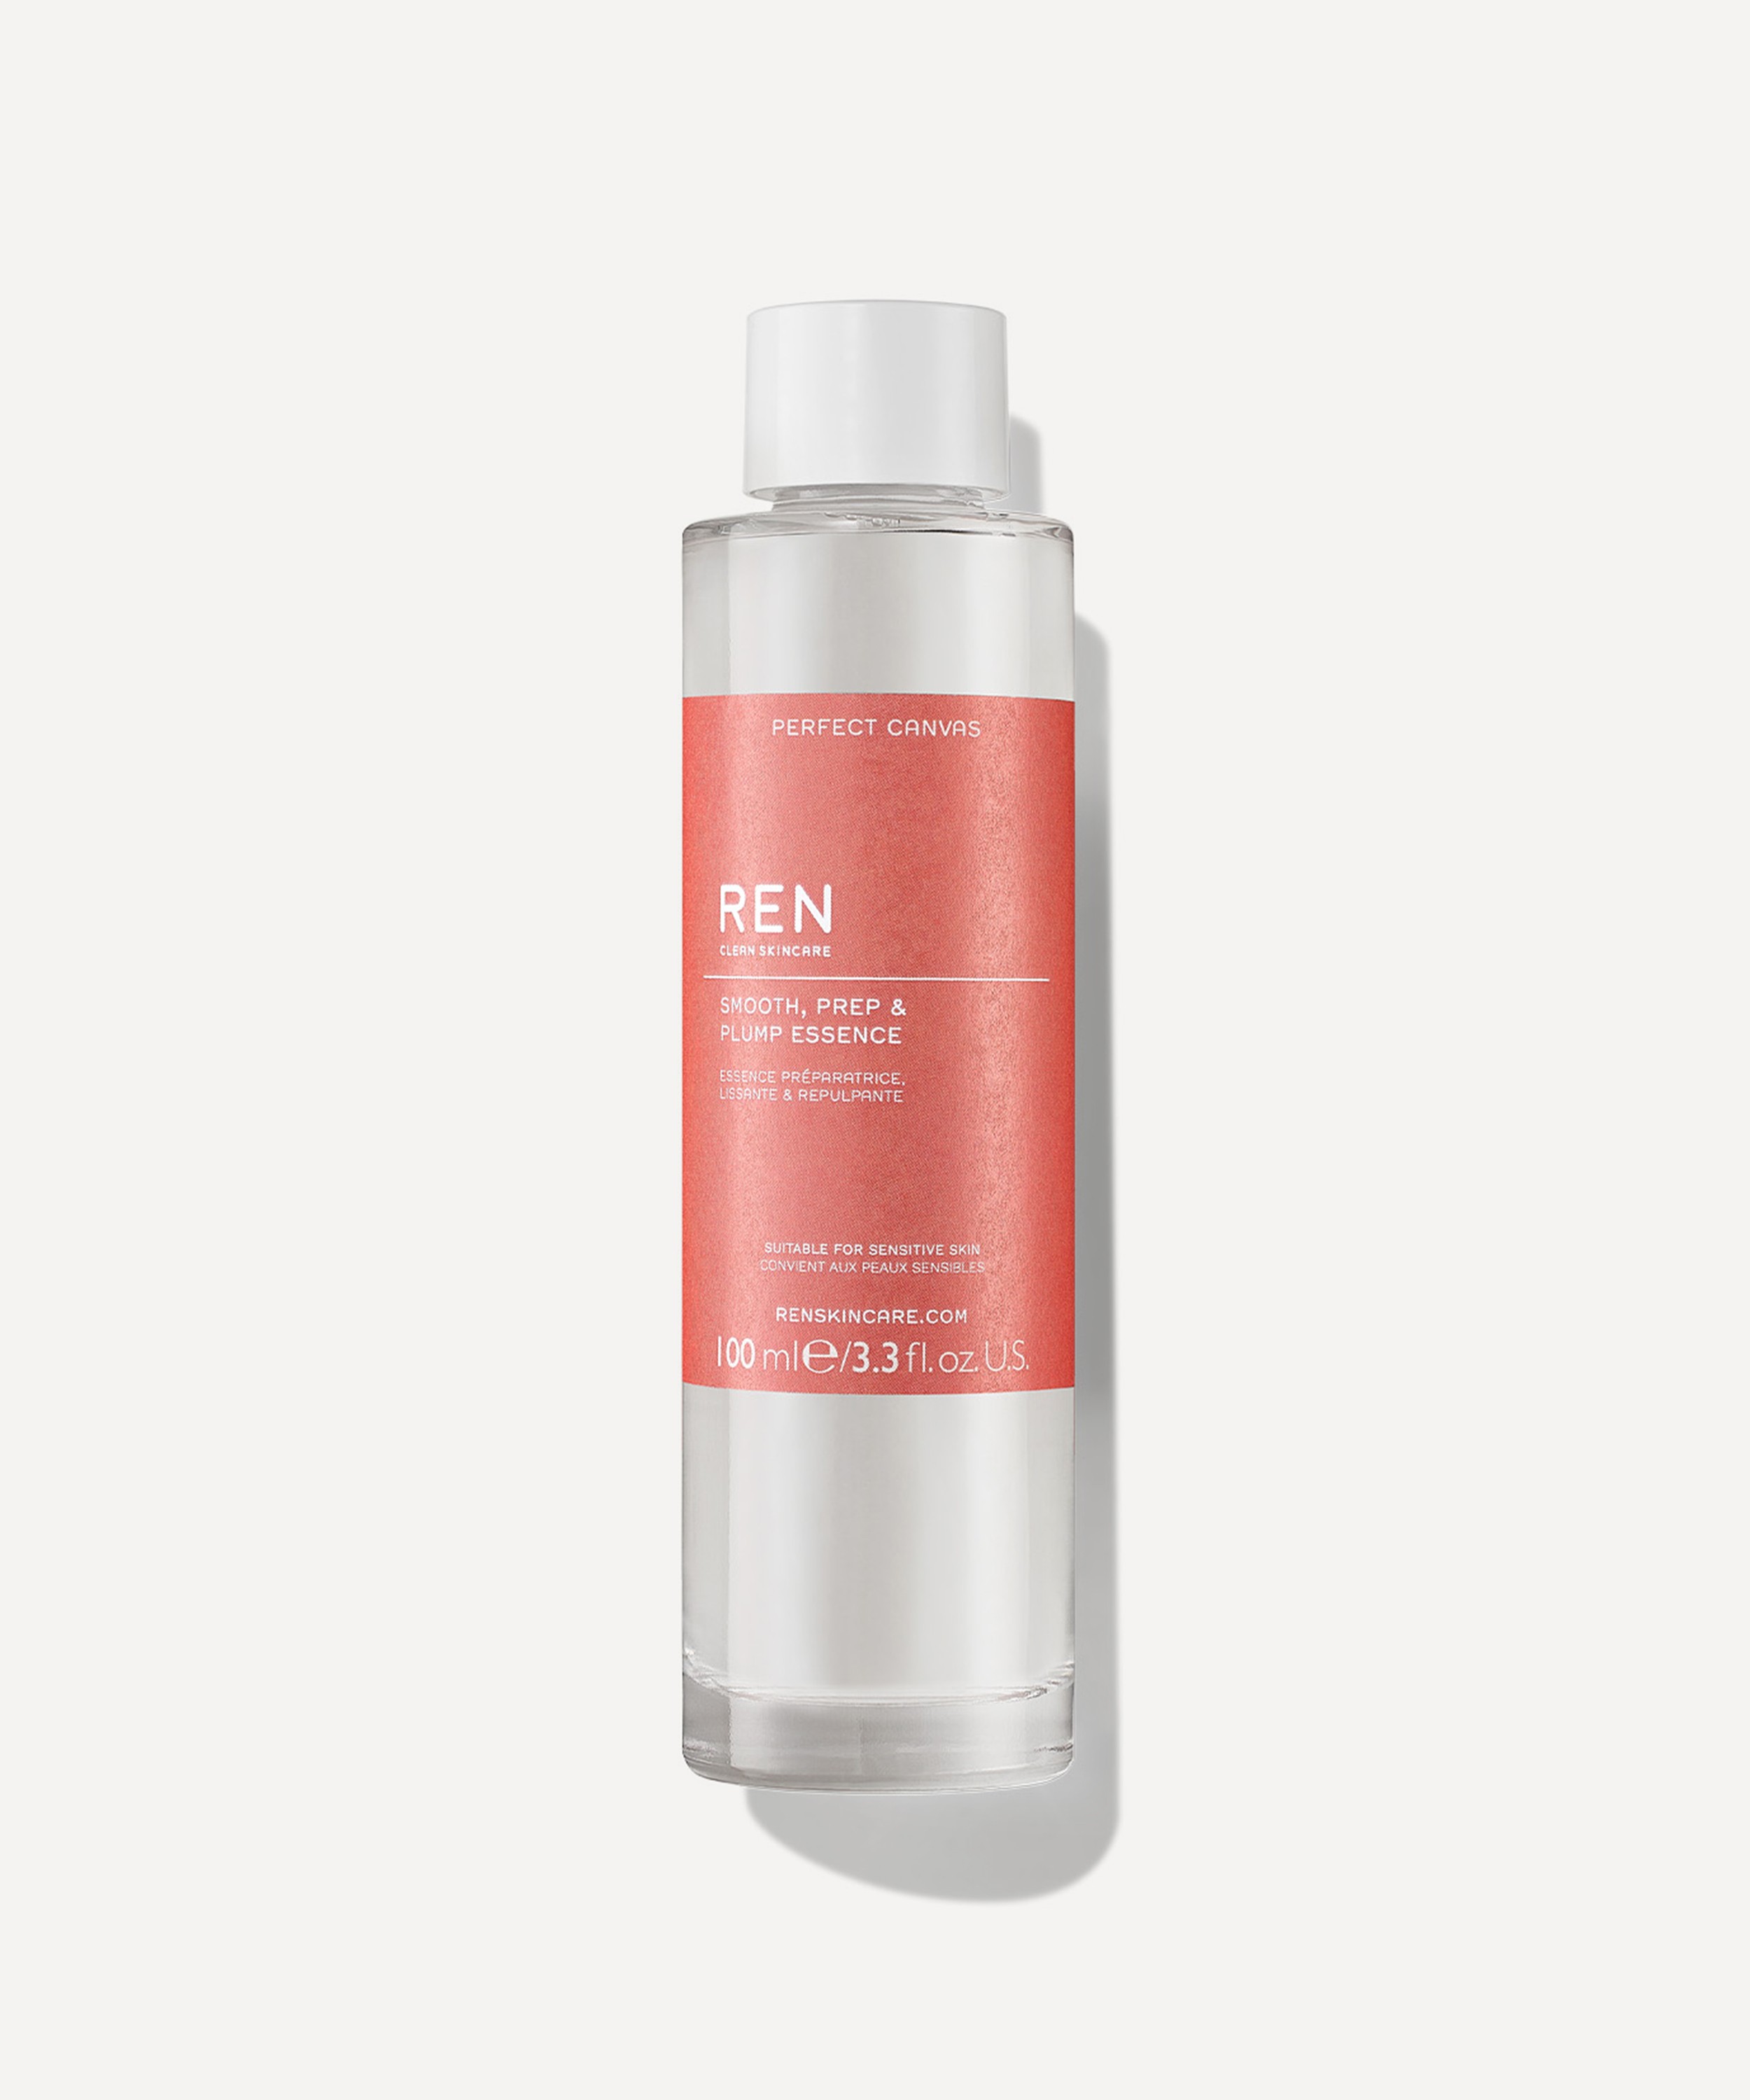 REN Clean Skincare - Perfect Canvas Smooth Prep & Plump Essence 100ml